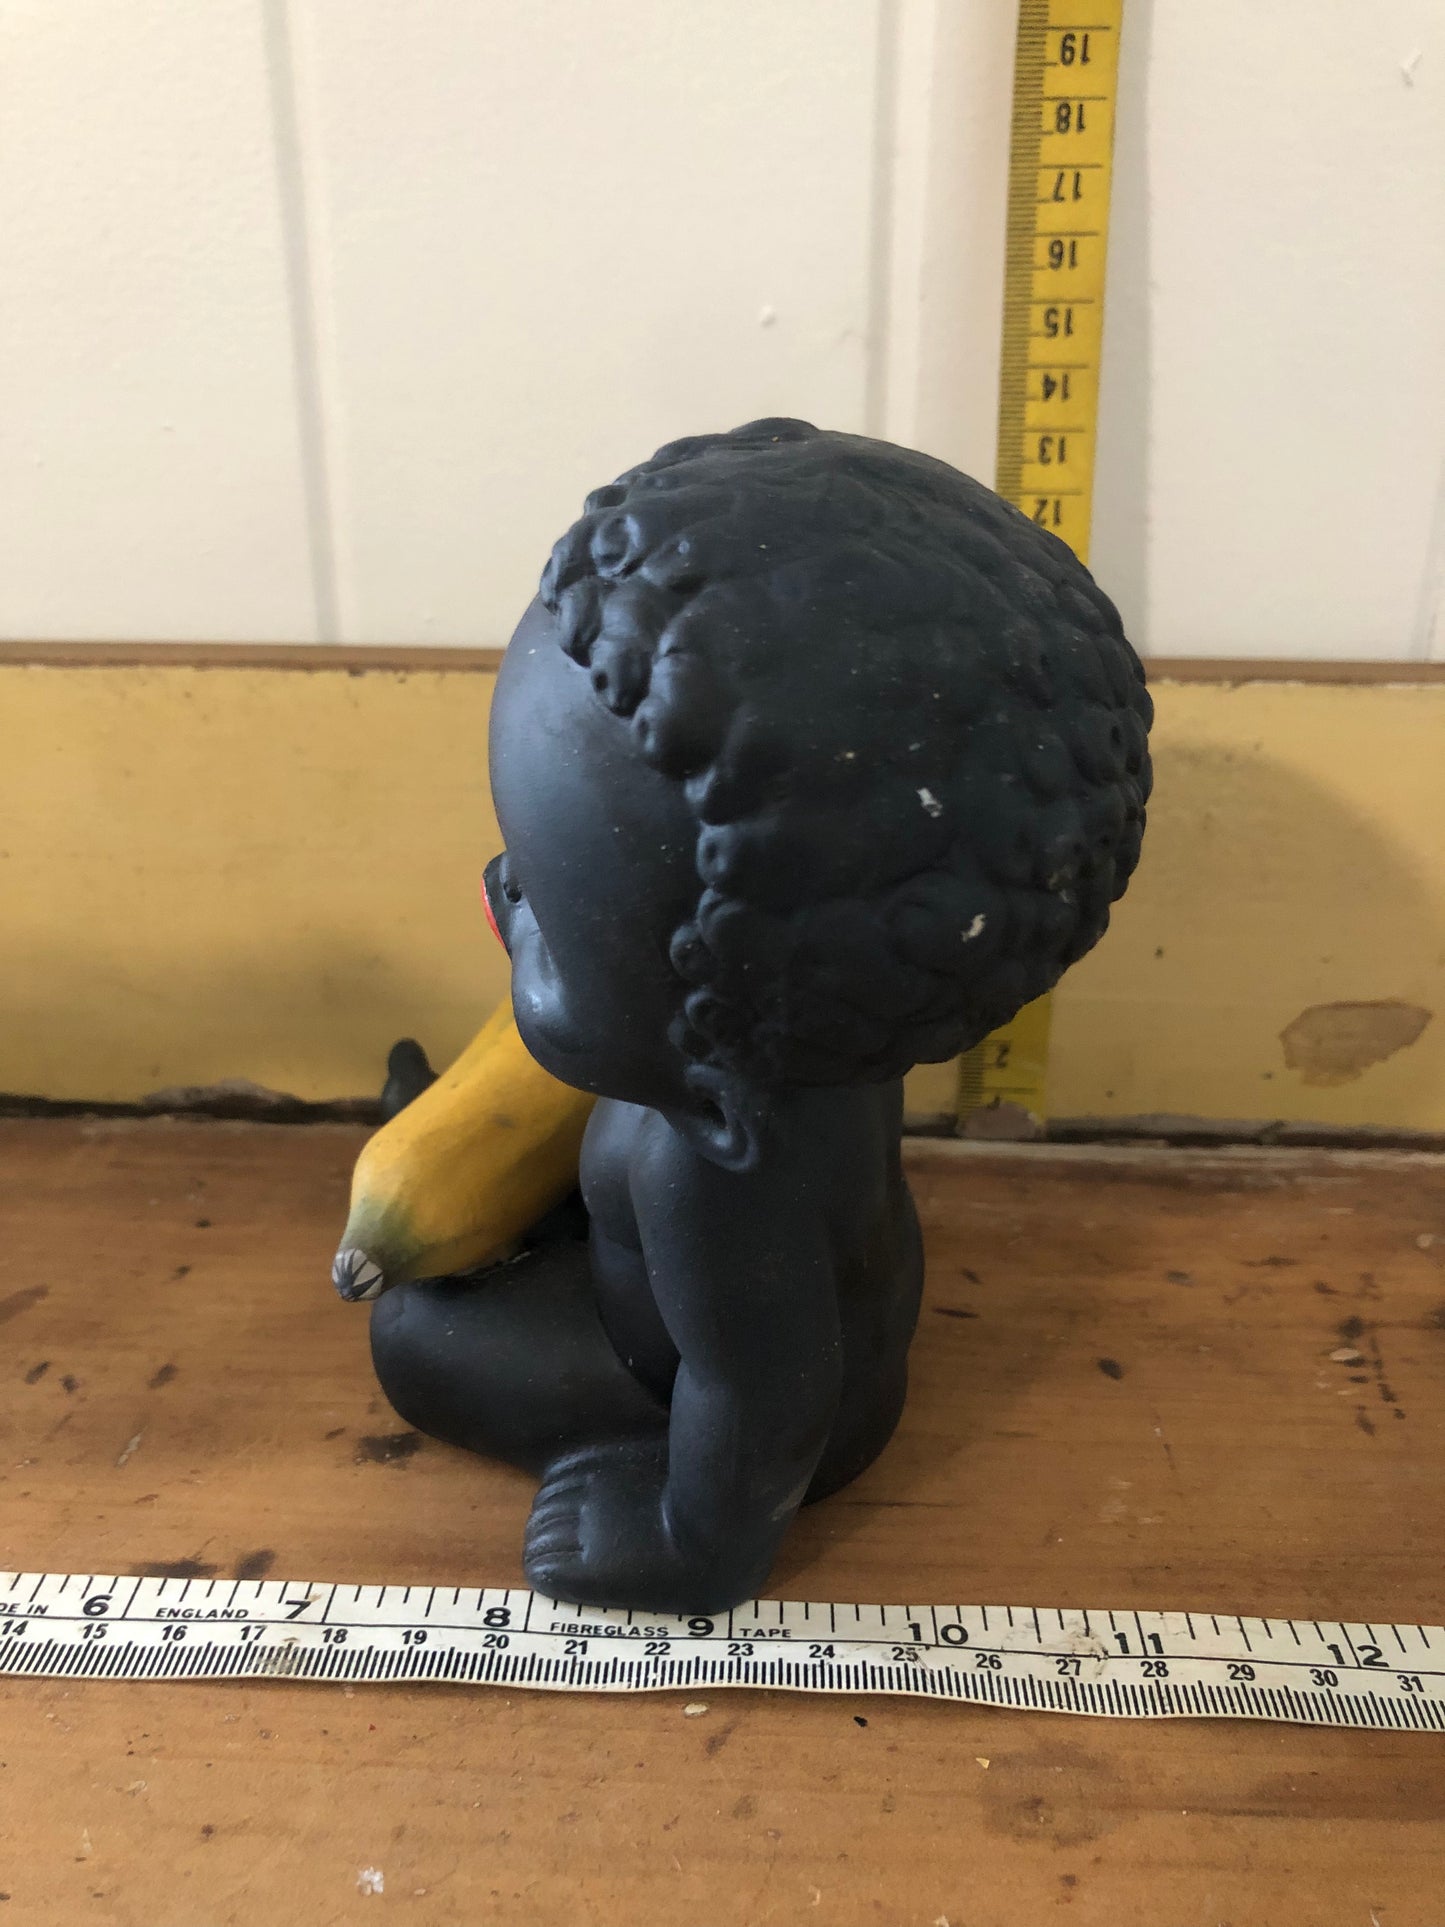 Baby with banana figurine. Black